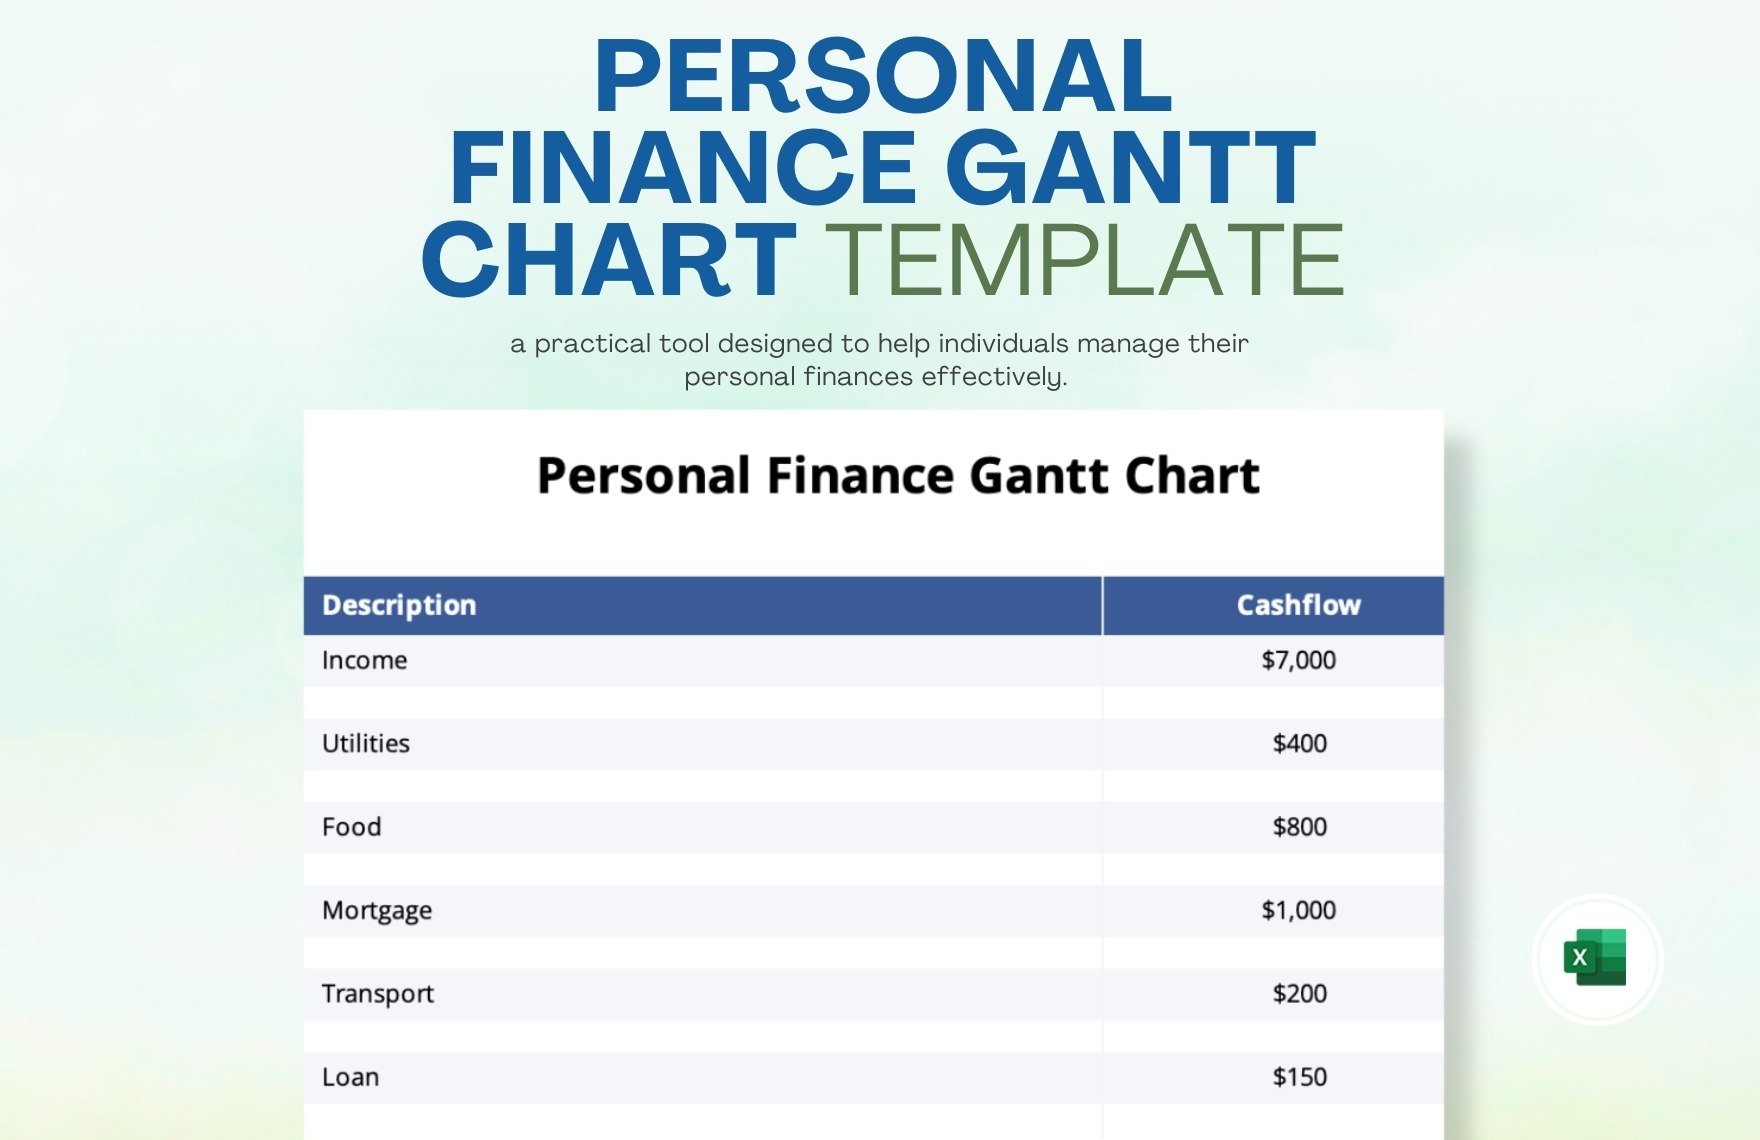 Personal Finance Gantt Chart Template in Excel